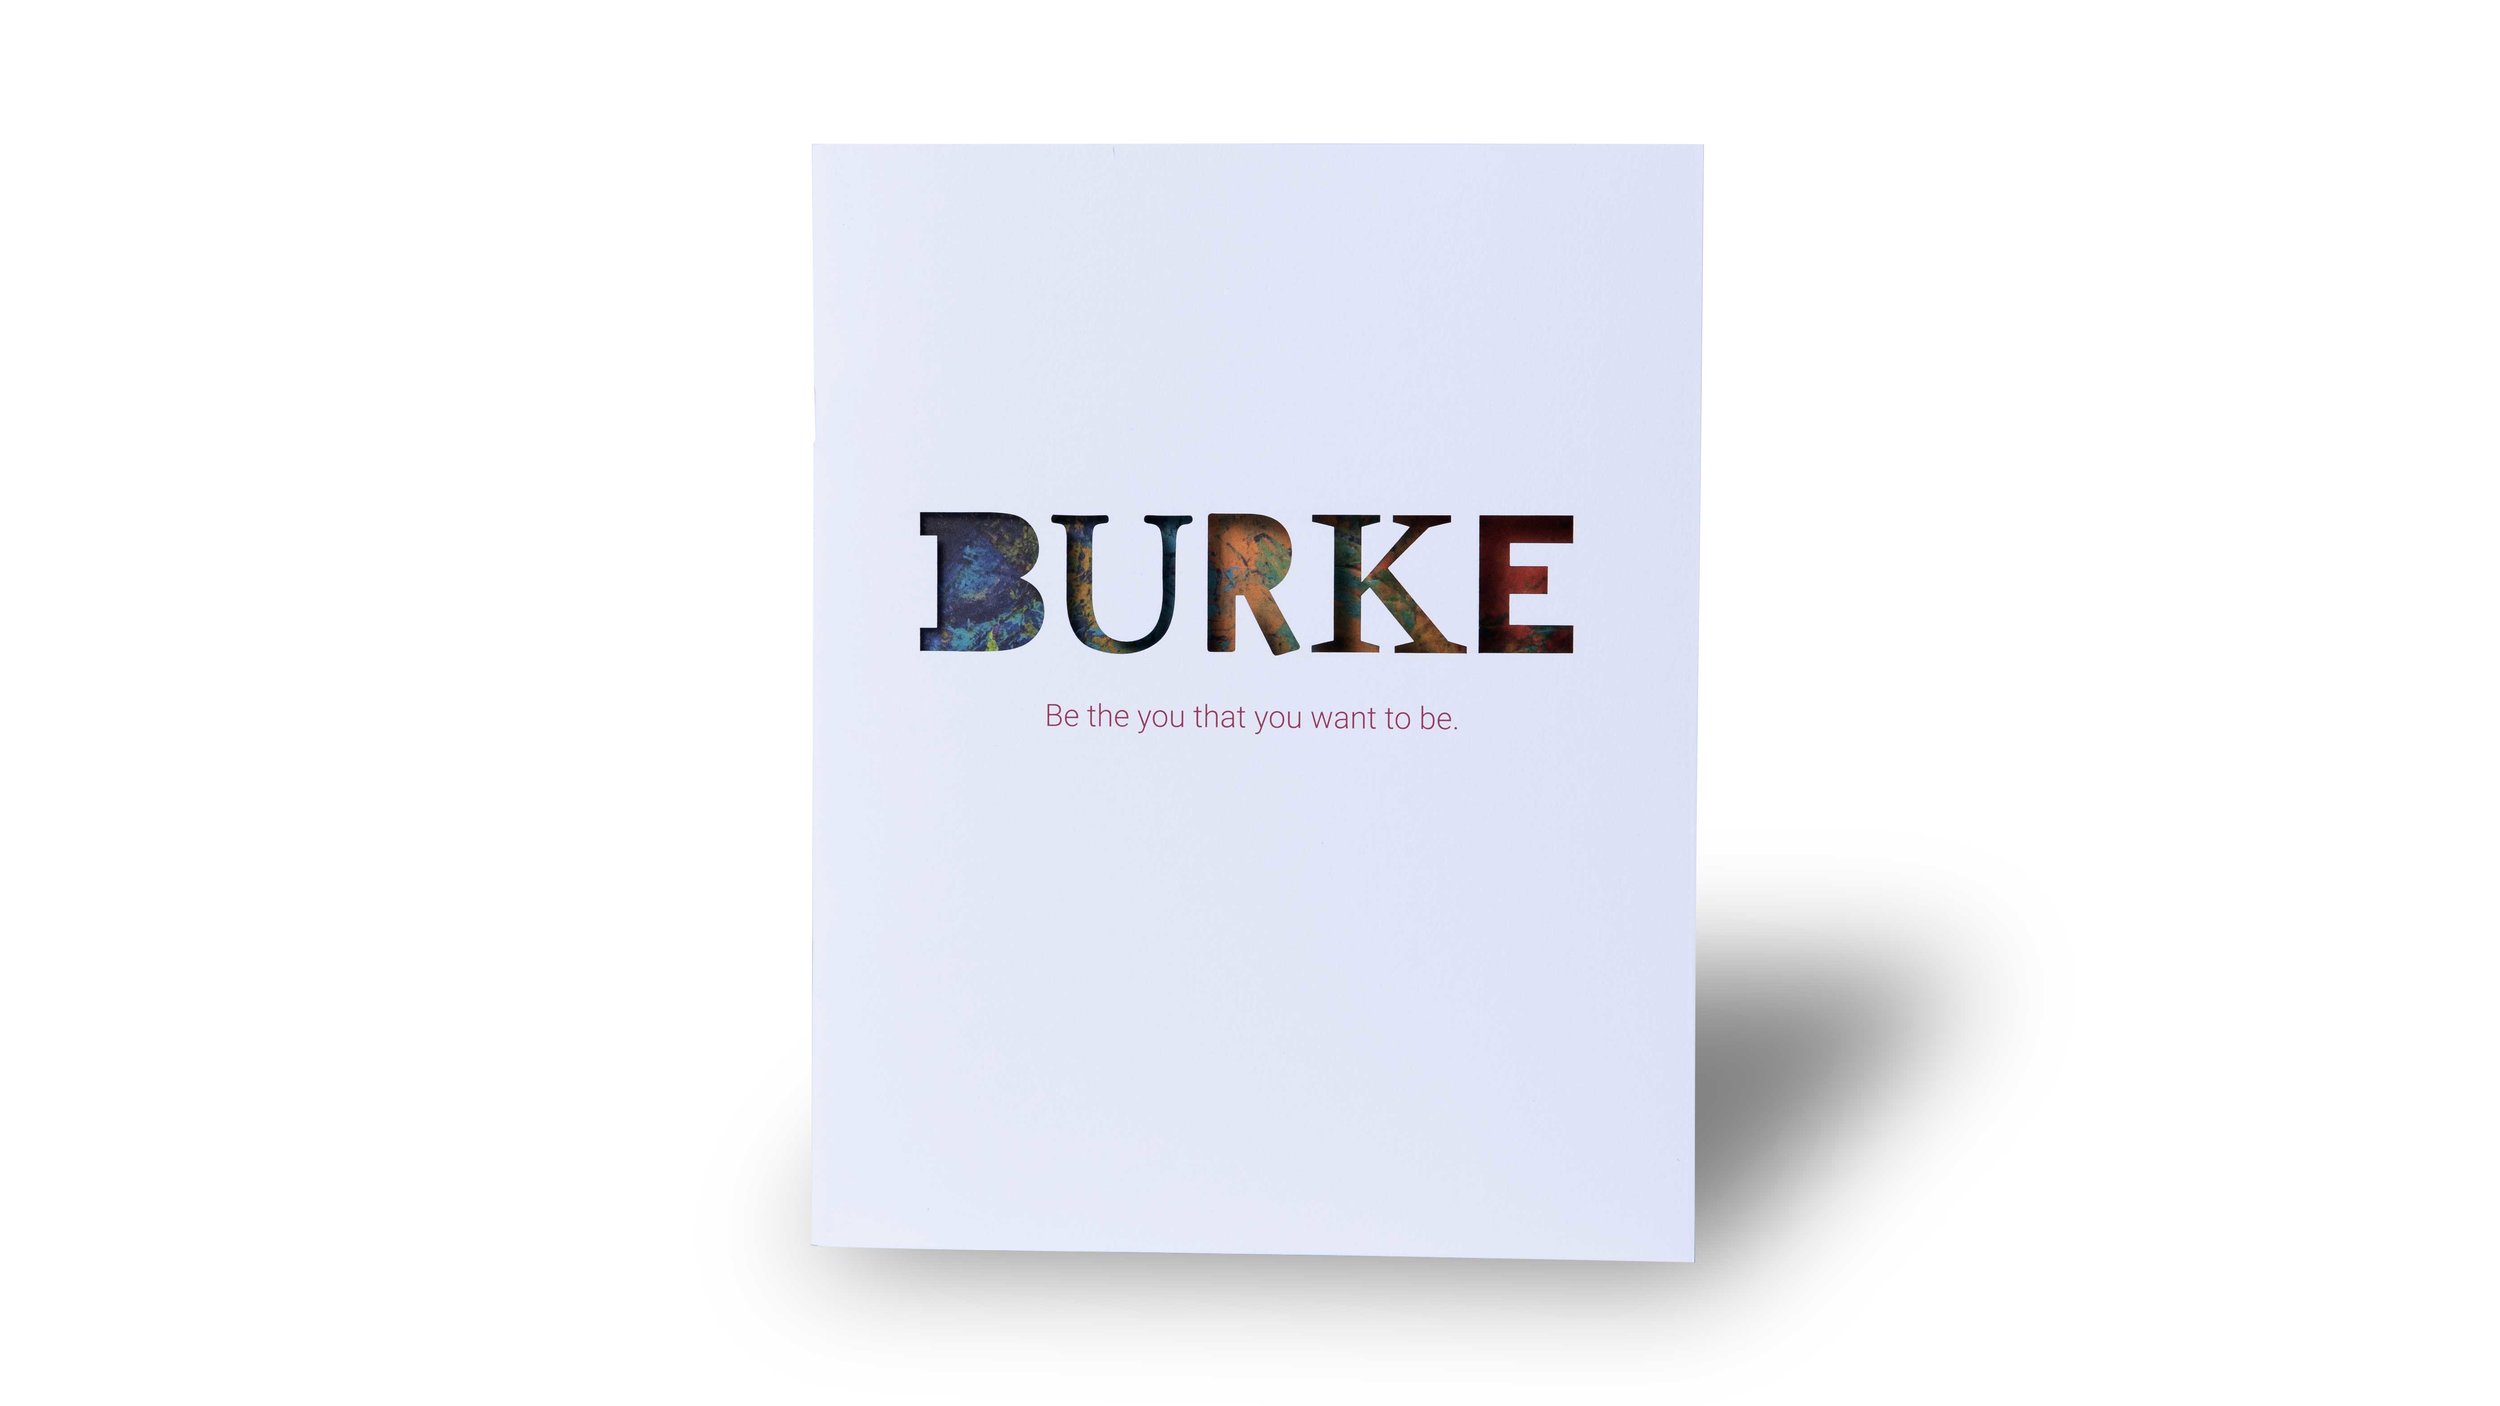 Edmund-Burke-School-Creosote-Affects-Viewbook.jpg